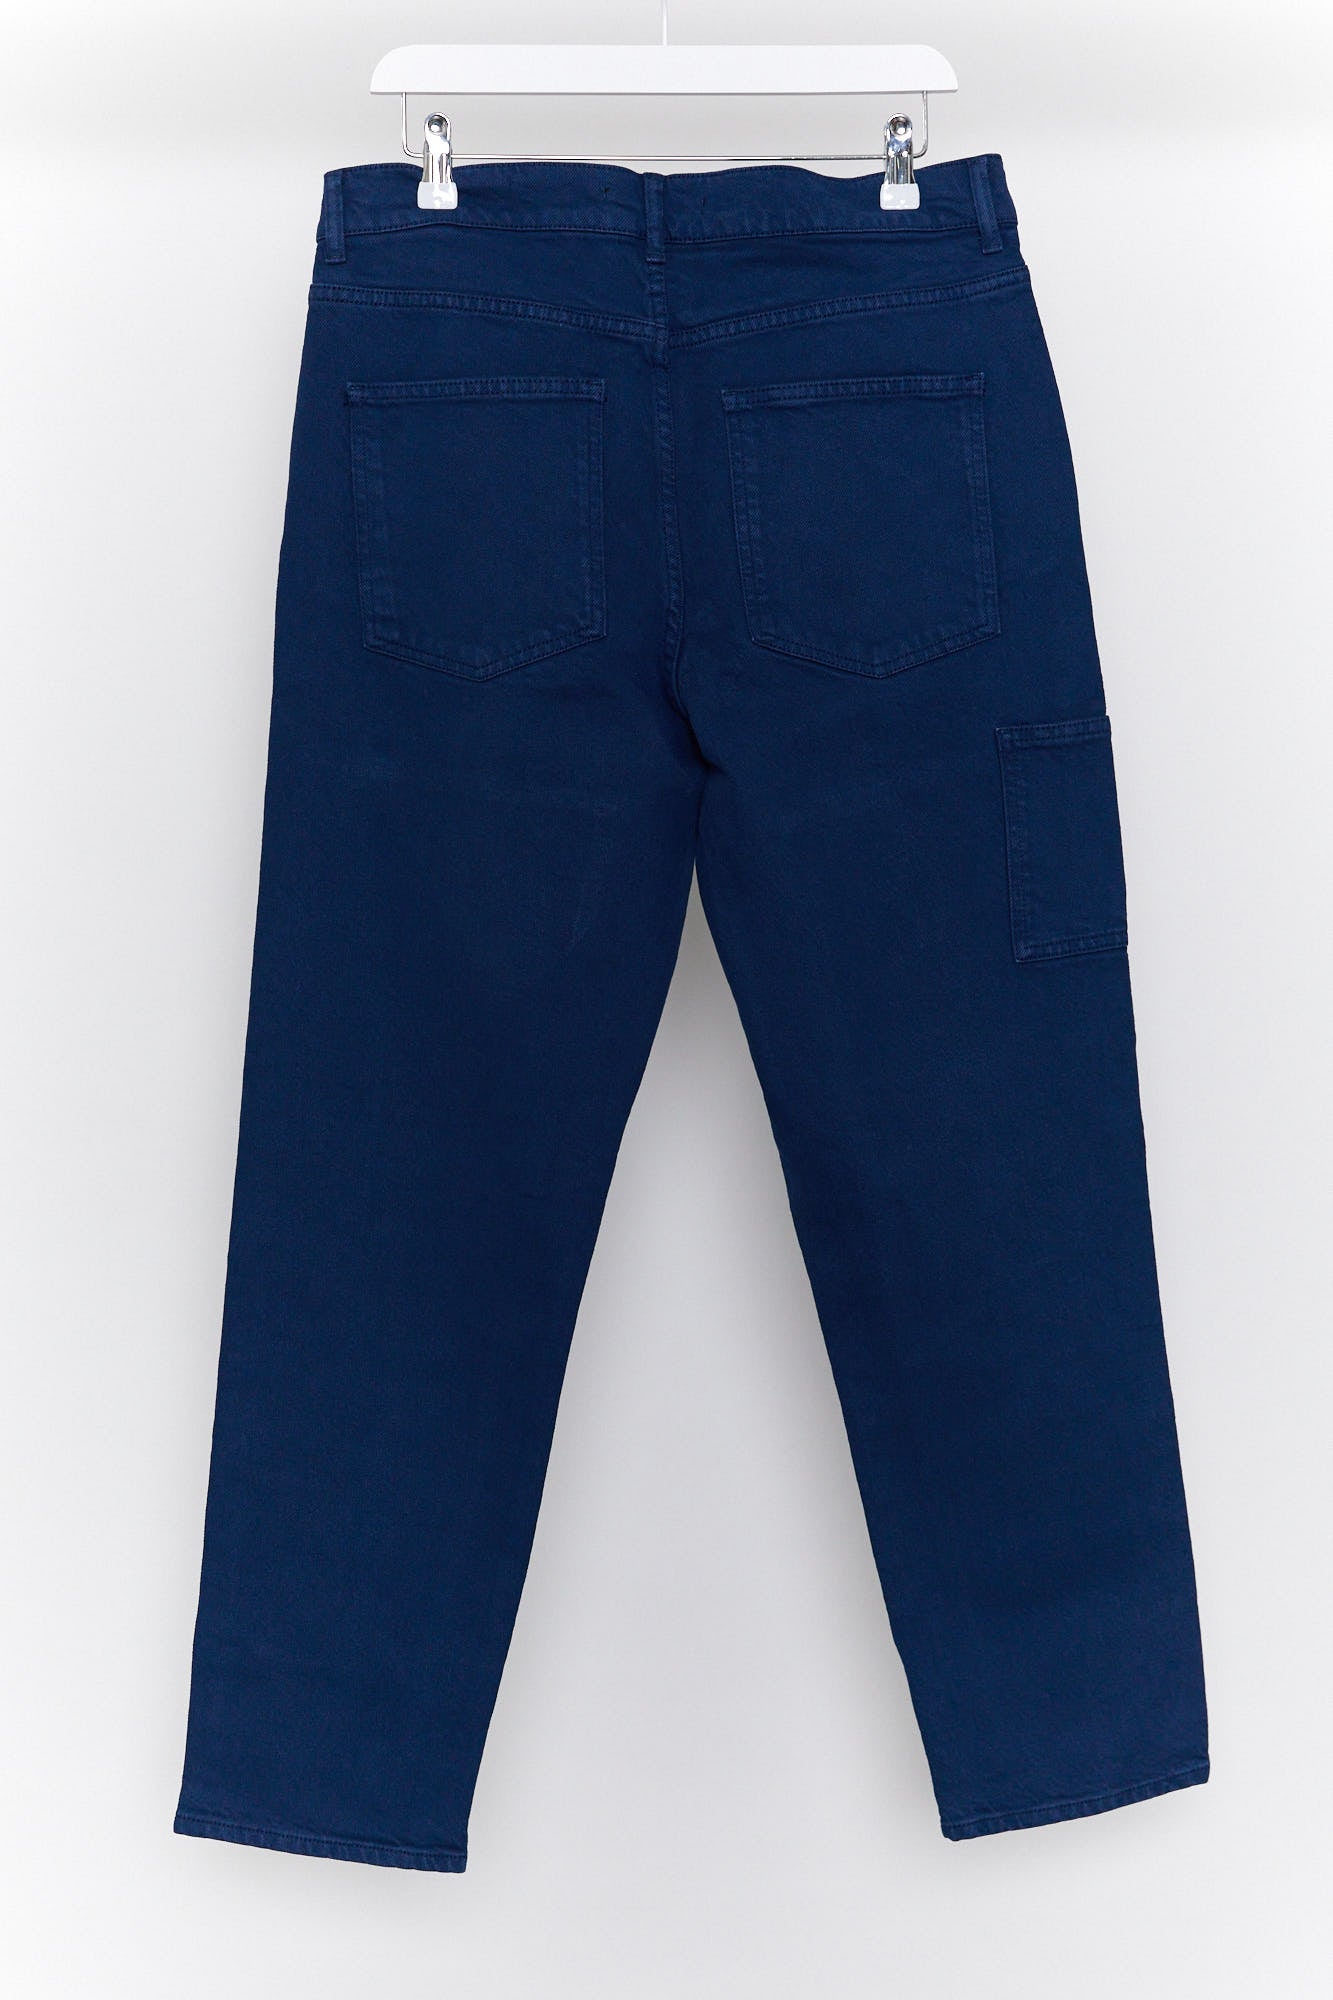 Mens Zara Blue Jeans W32 L30